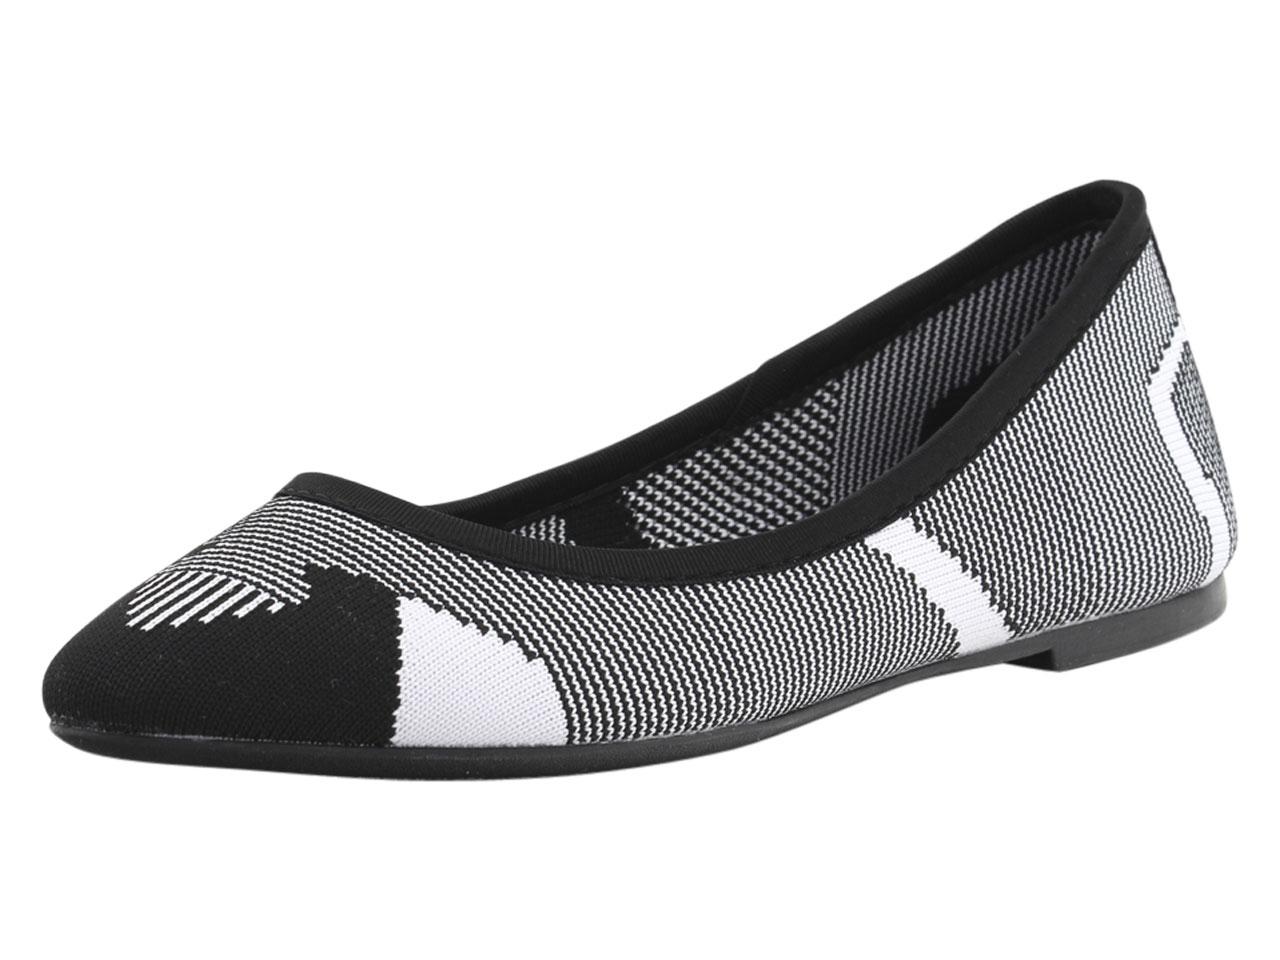 Skechers Women's Cleo Wham Memory Foam Flats Shoes - Black/White - 6.5 B(M) US